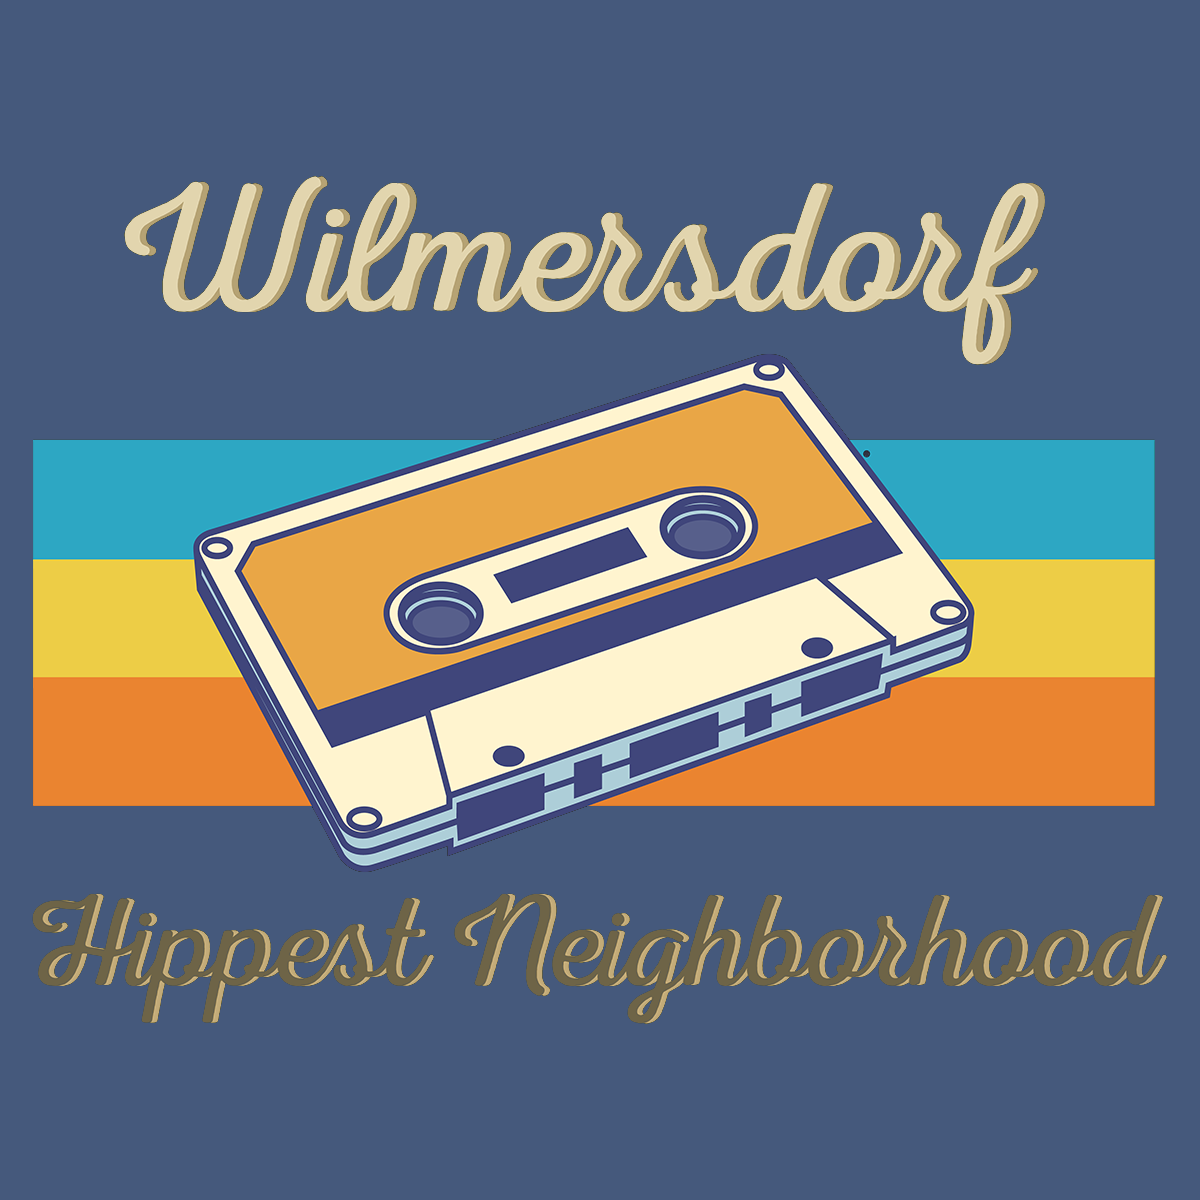 Wilmersdorf Hippest Neighborhood